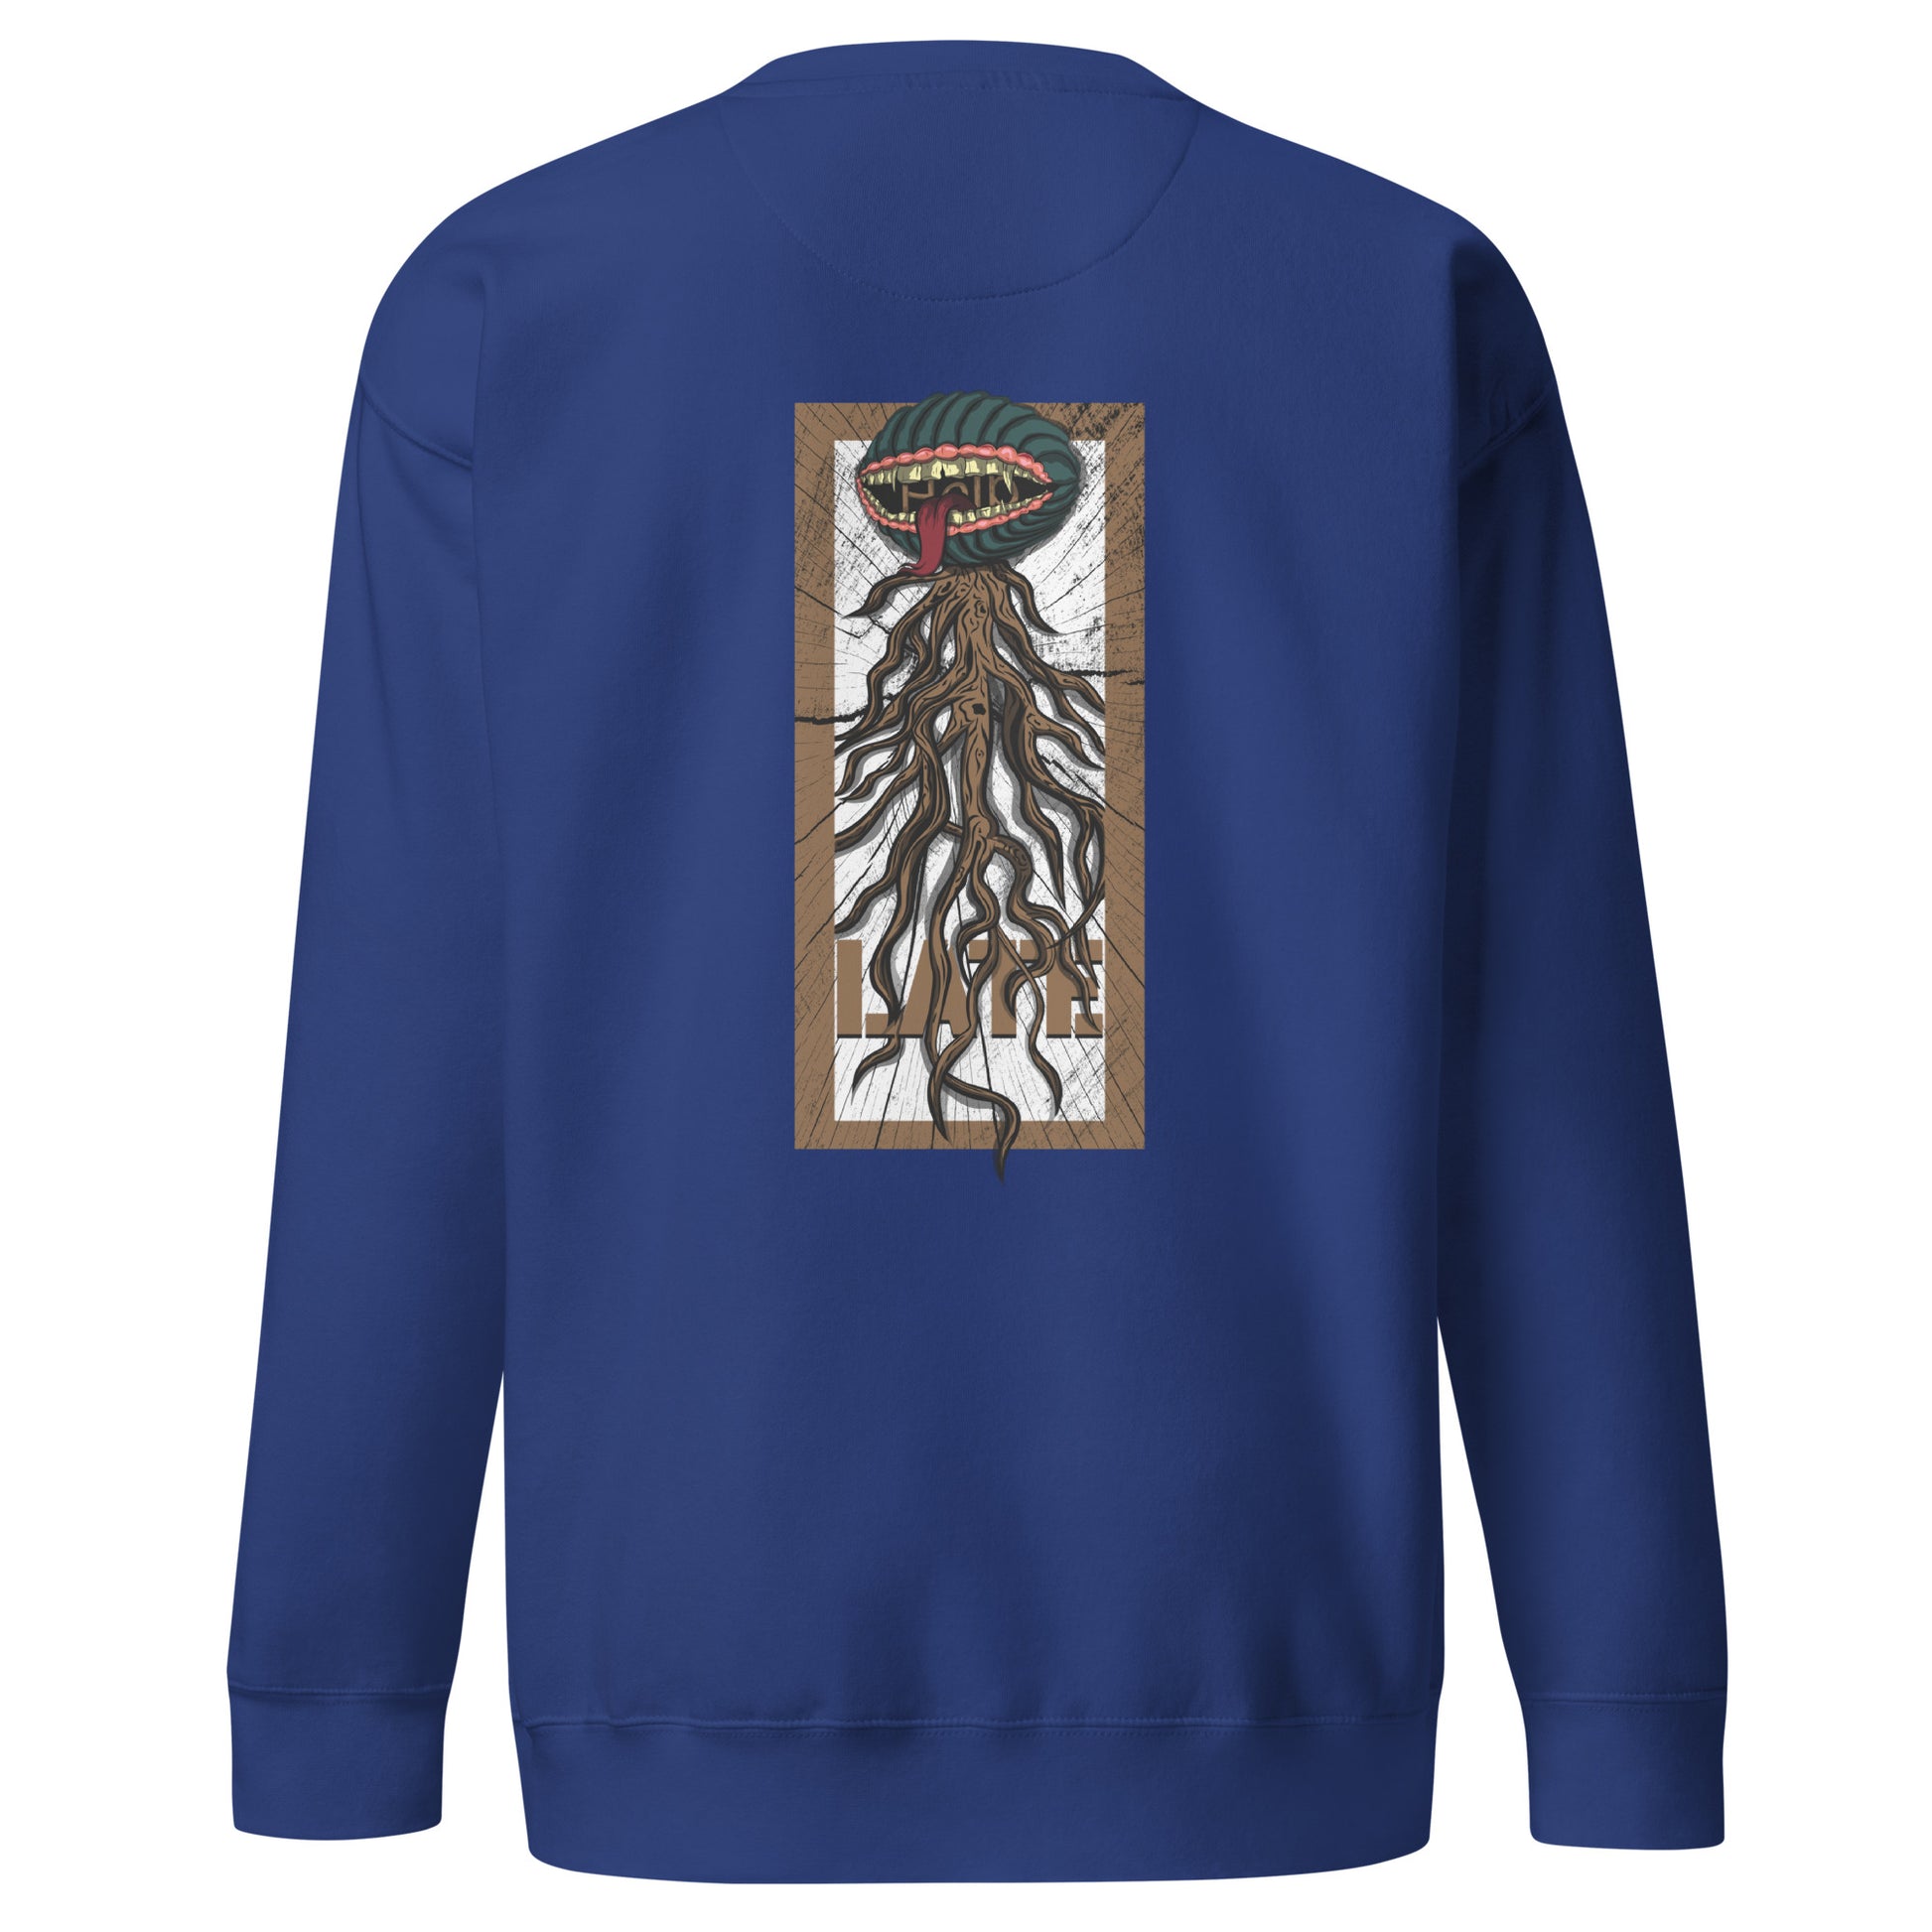 Sweatshirt Hungry plante carnivore style santacruz skateboarding, fond style bois old school skate, sweat unisex dos couleur bleu